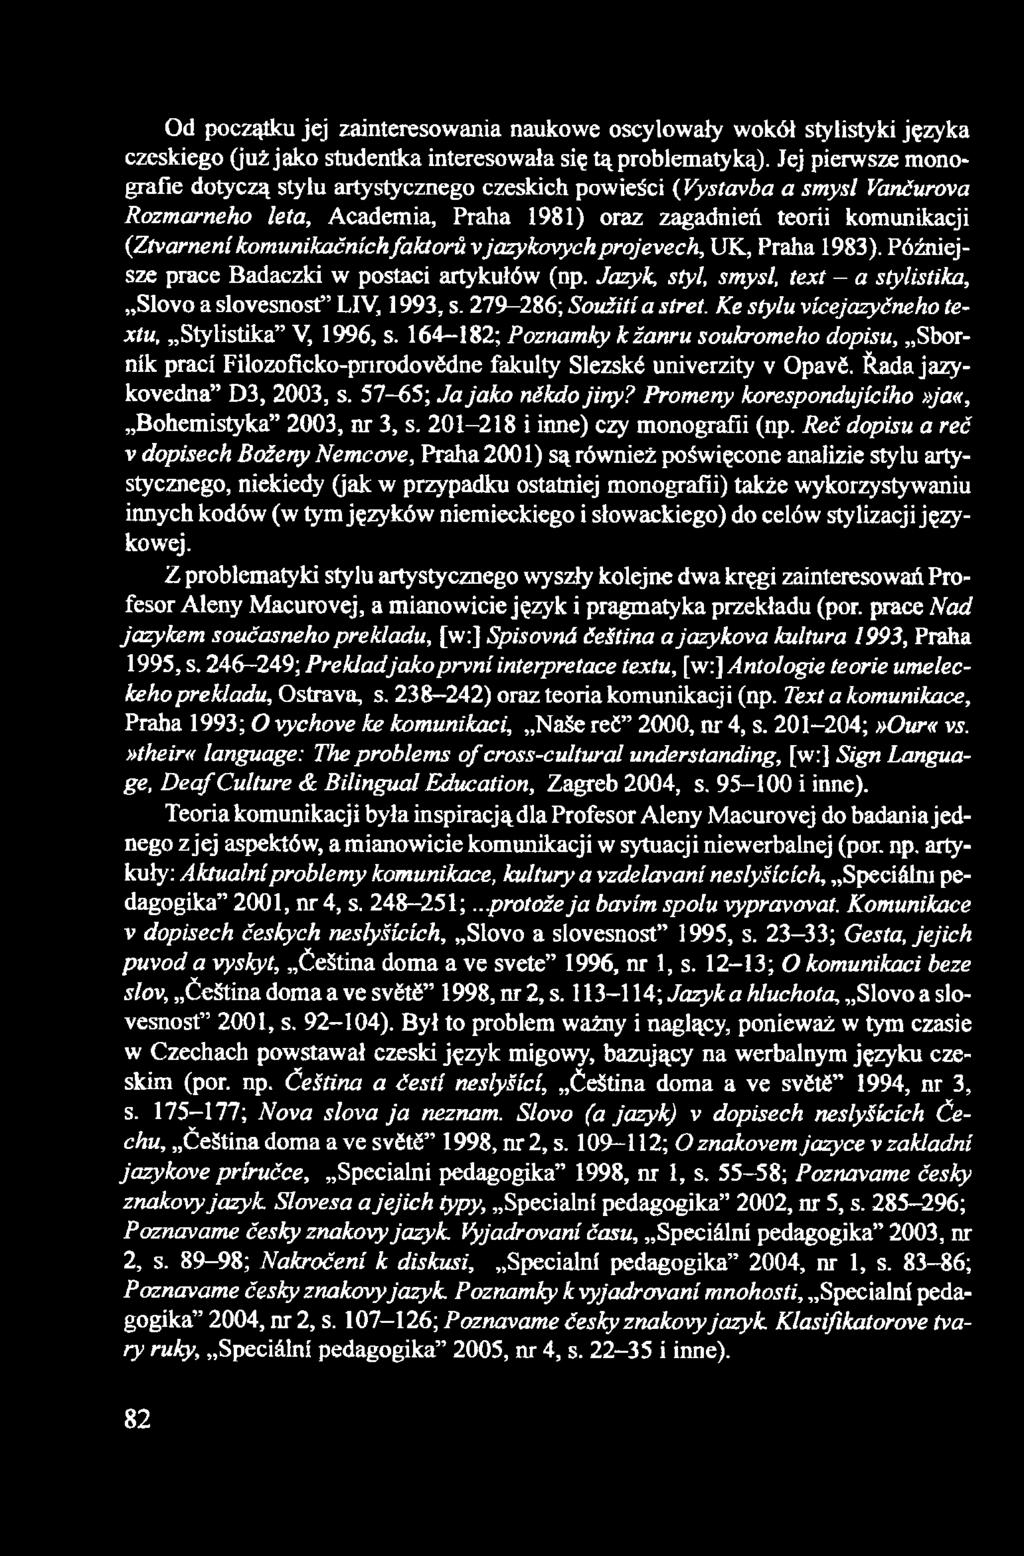 ftada jazykovedna D3, 2003, s. 57-65; Ja jako nikdo jiny? Promeny korespondujiciho»ja«, Bohemistyka 2003, nr 3, s. 201-218 i inne) czy monografii (np.